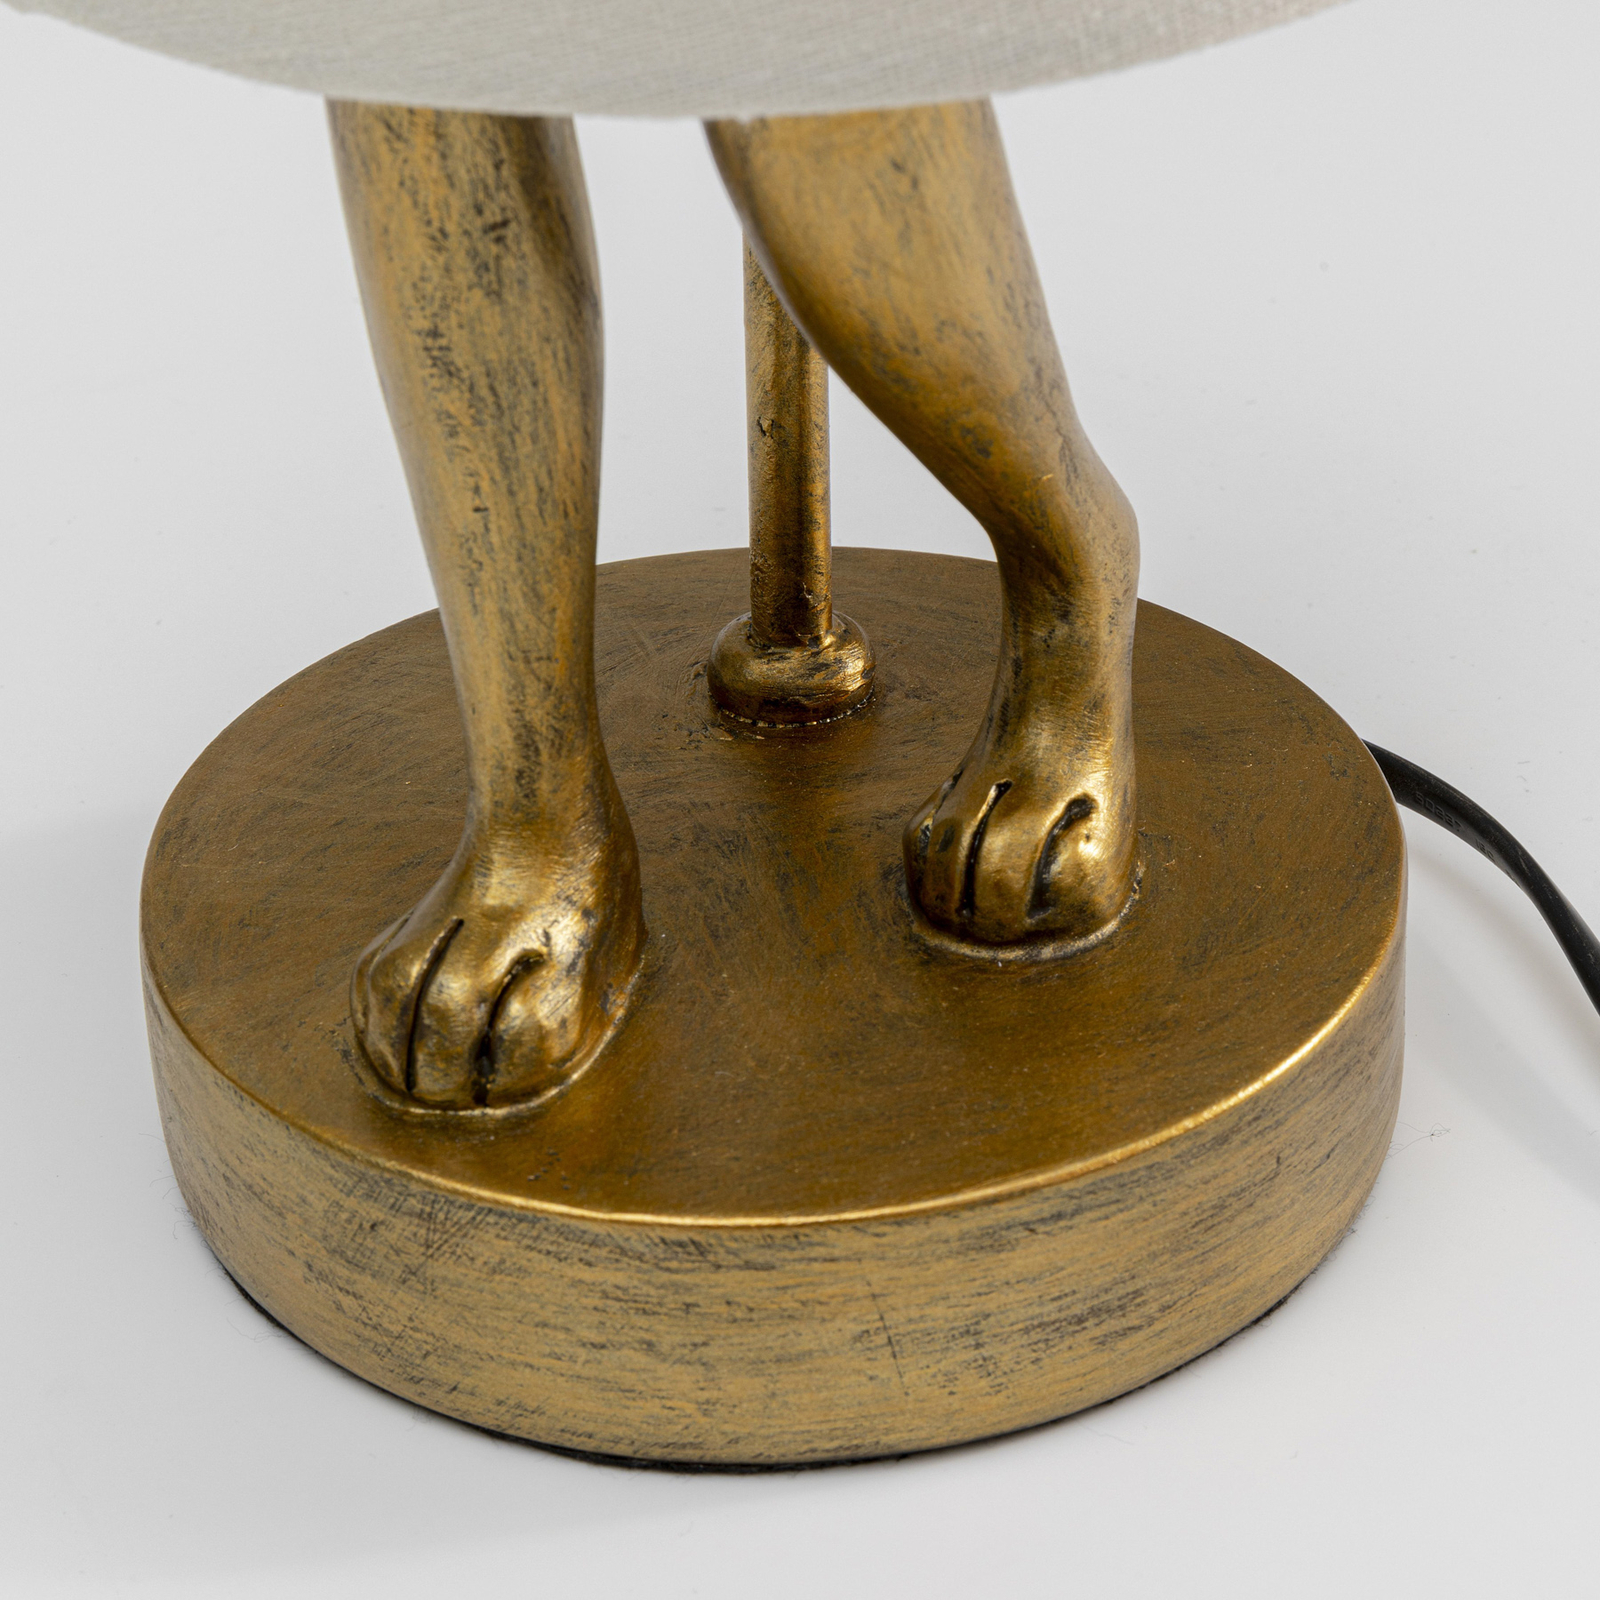 KARE Animal Rabbit bordlampe, guld/hvid, højde 50 cm